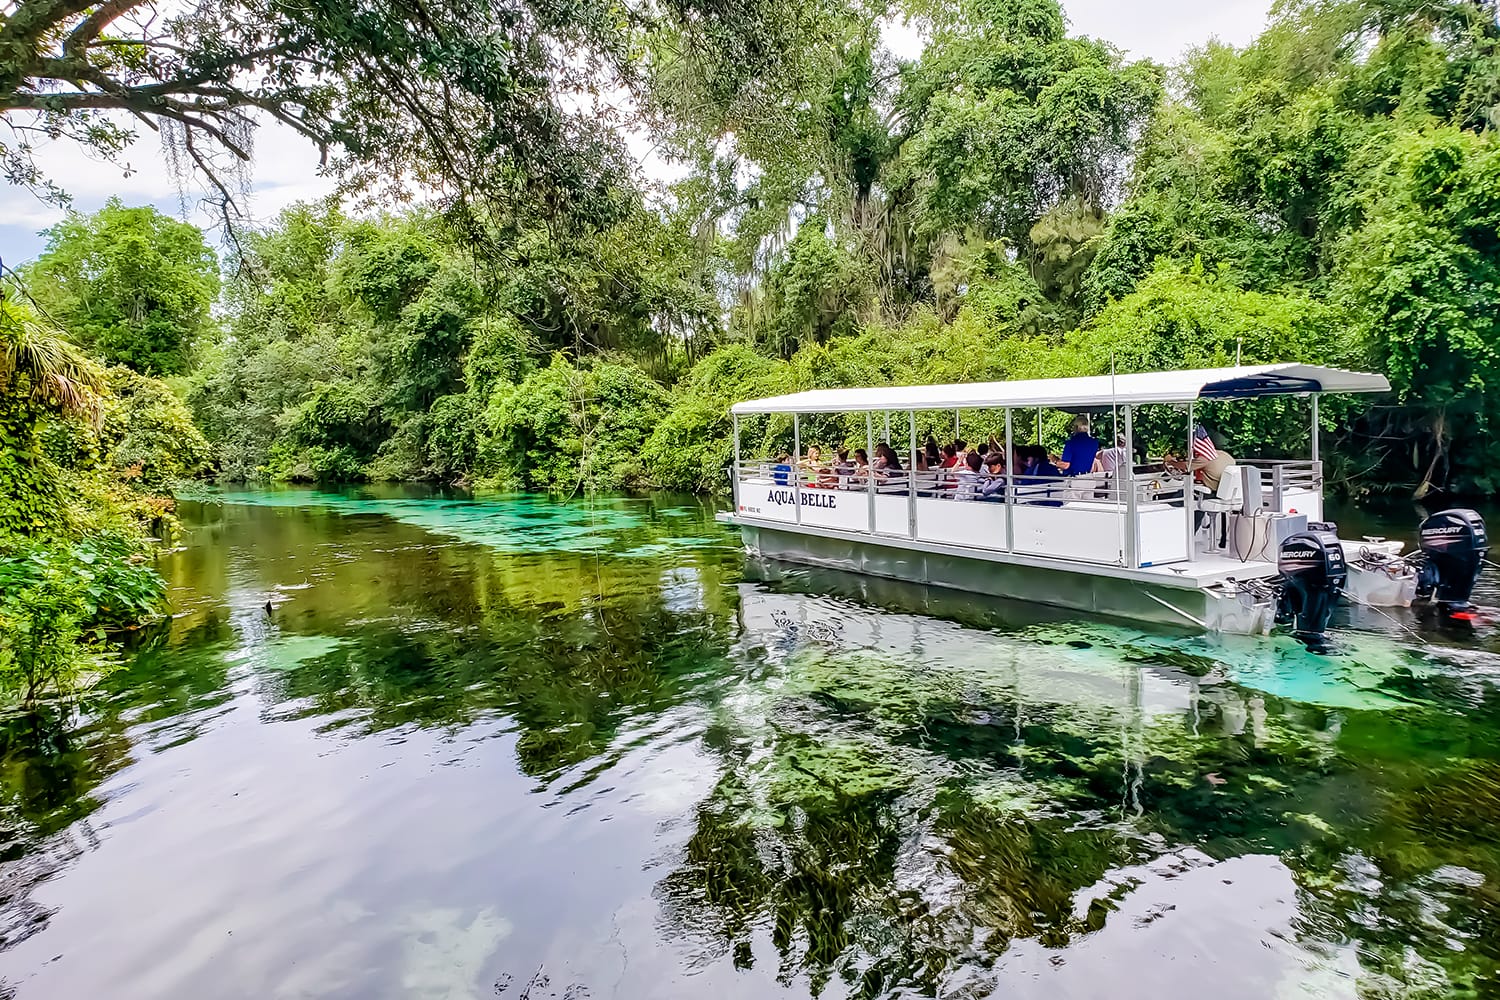 Aqua Belle boat ride down the Weeki Wachee Springs River in Florida